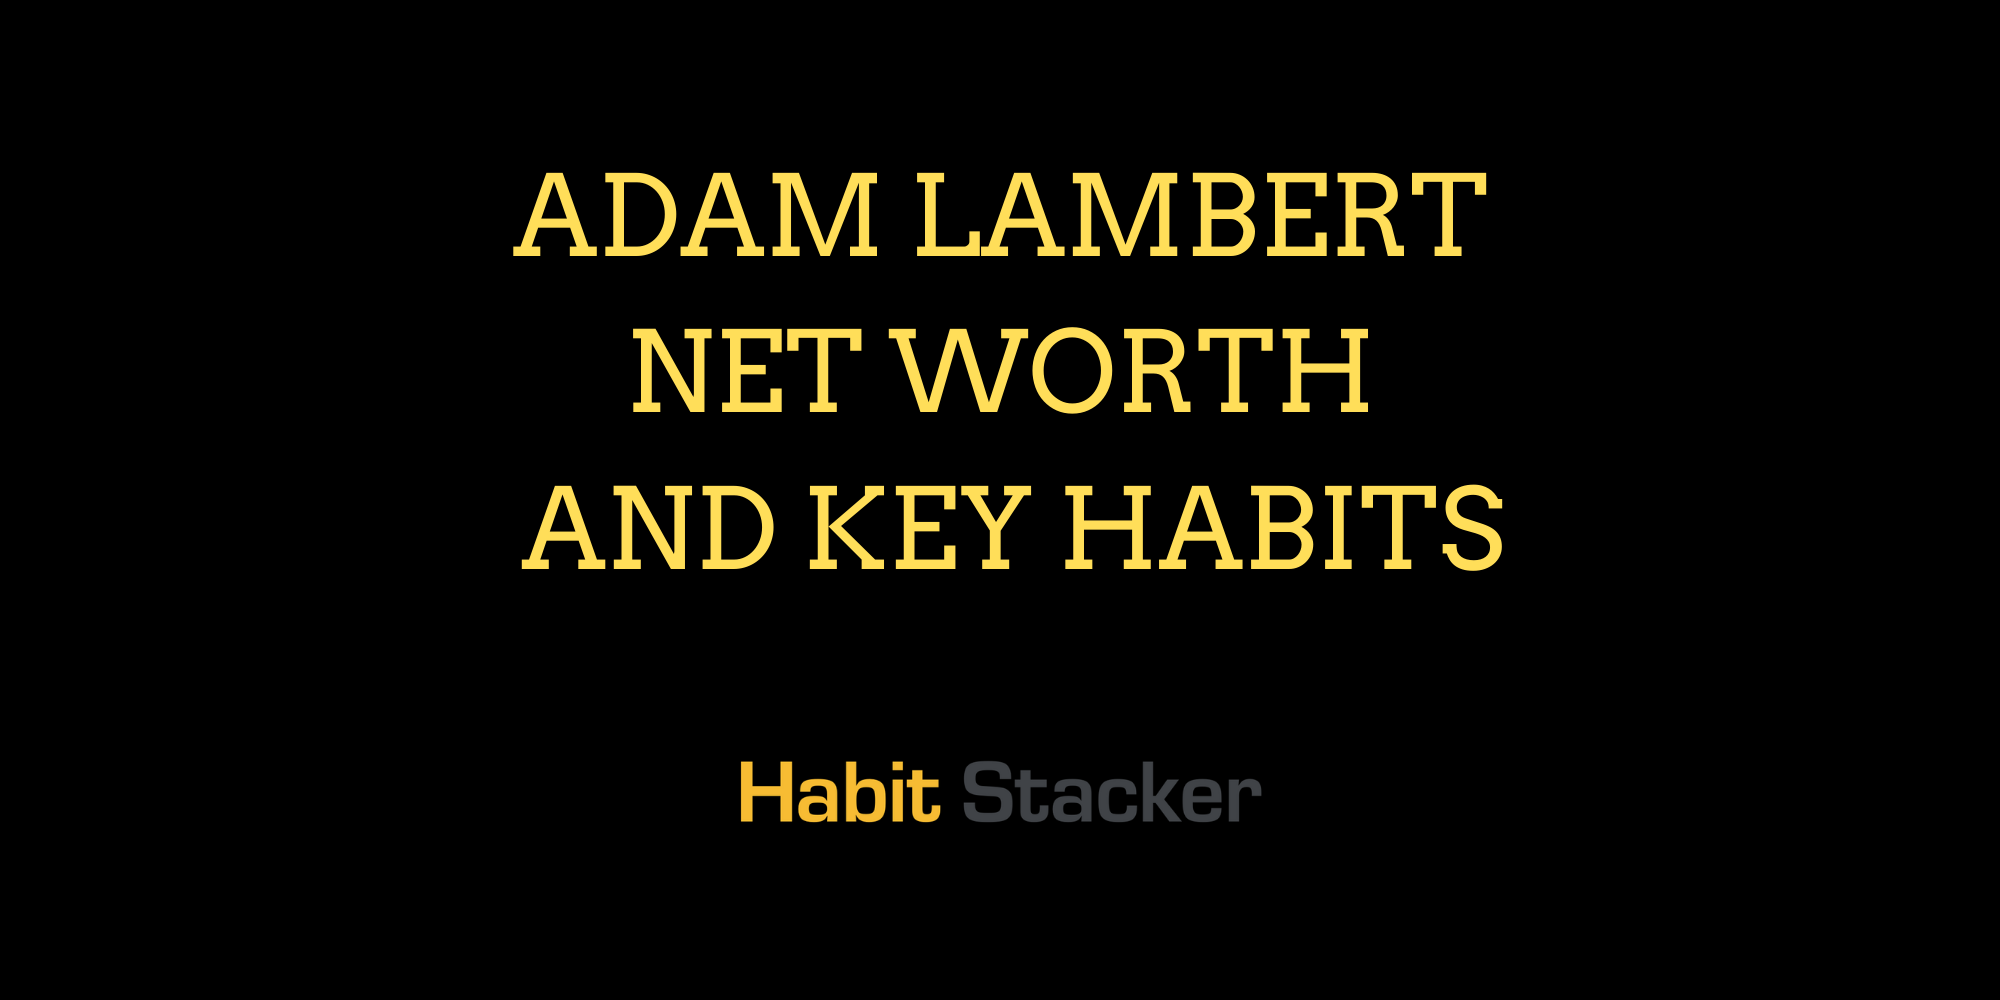 Adam Lambert Net Worth and Key Habits